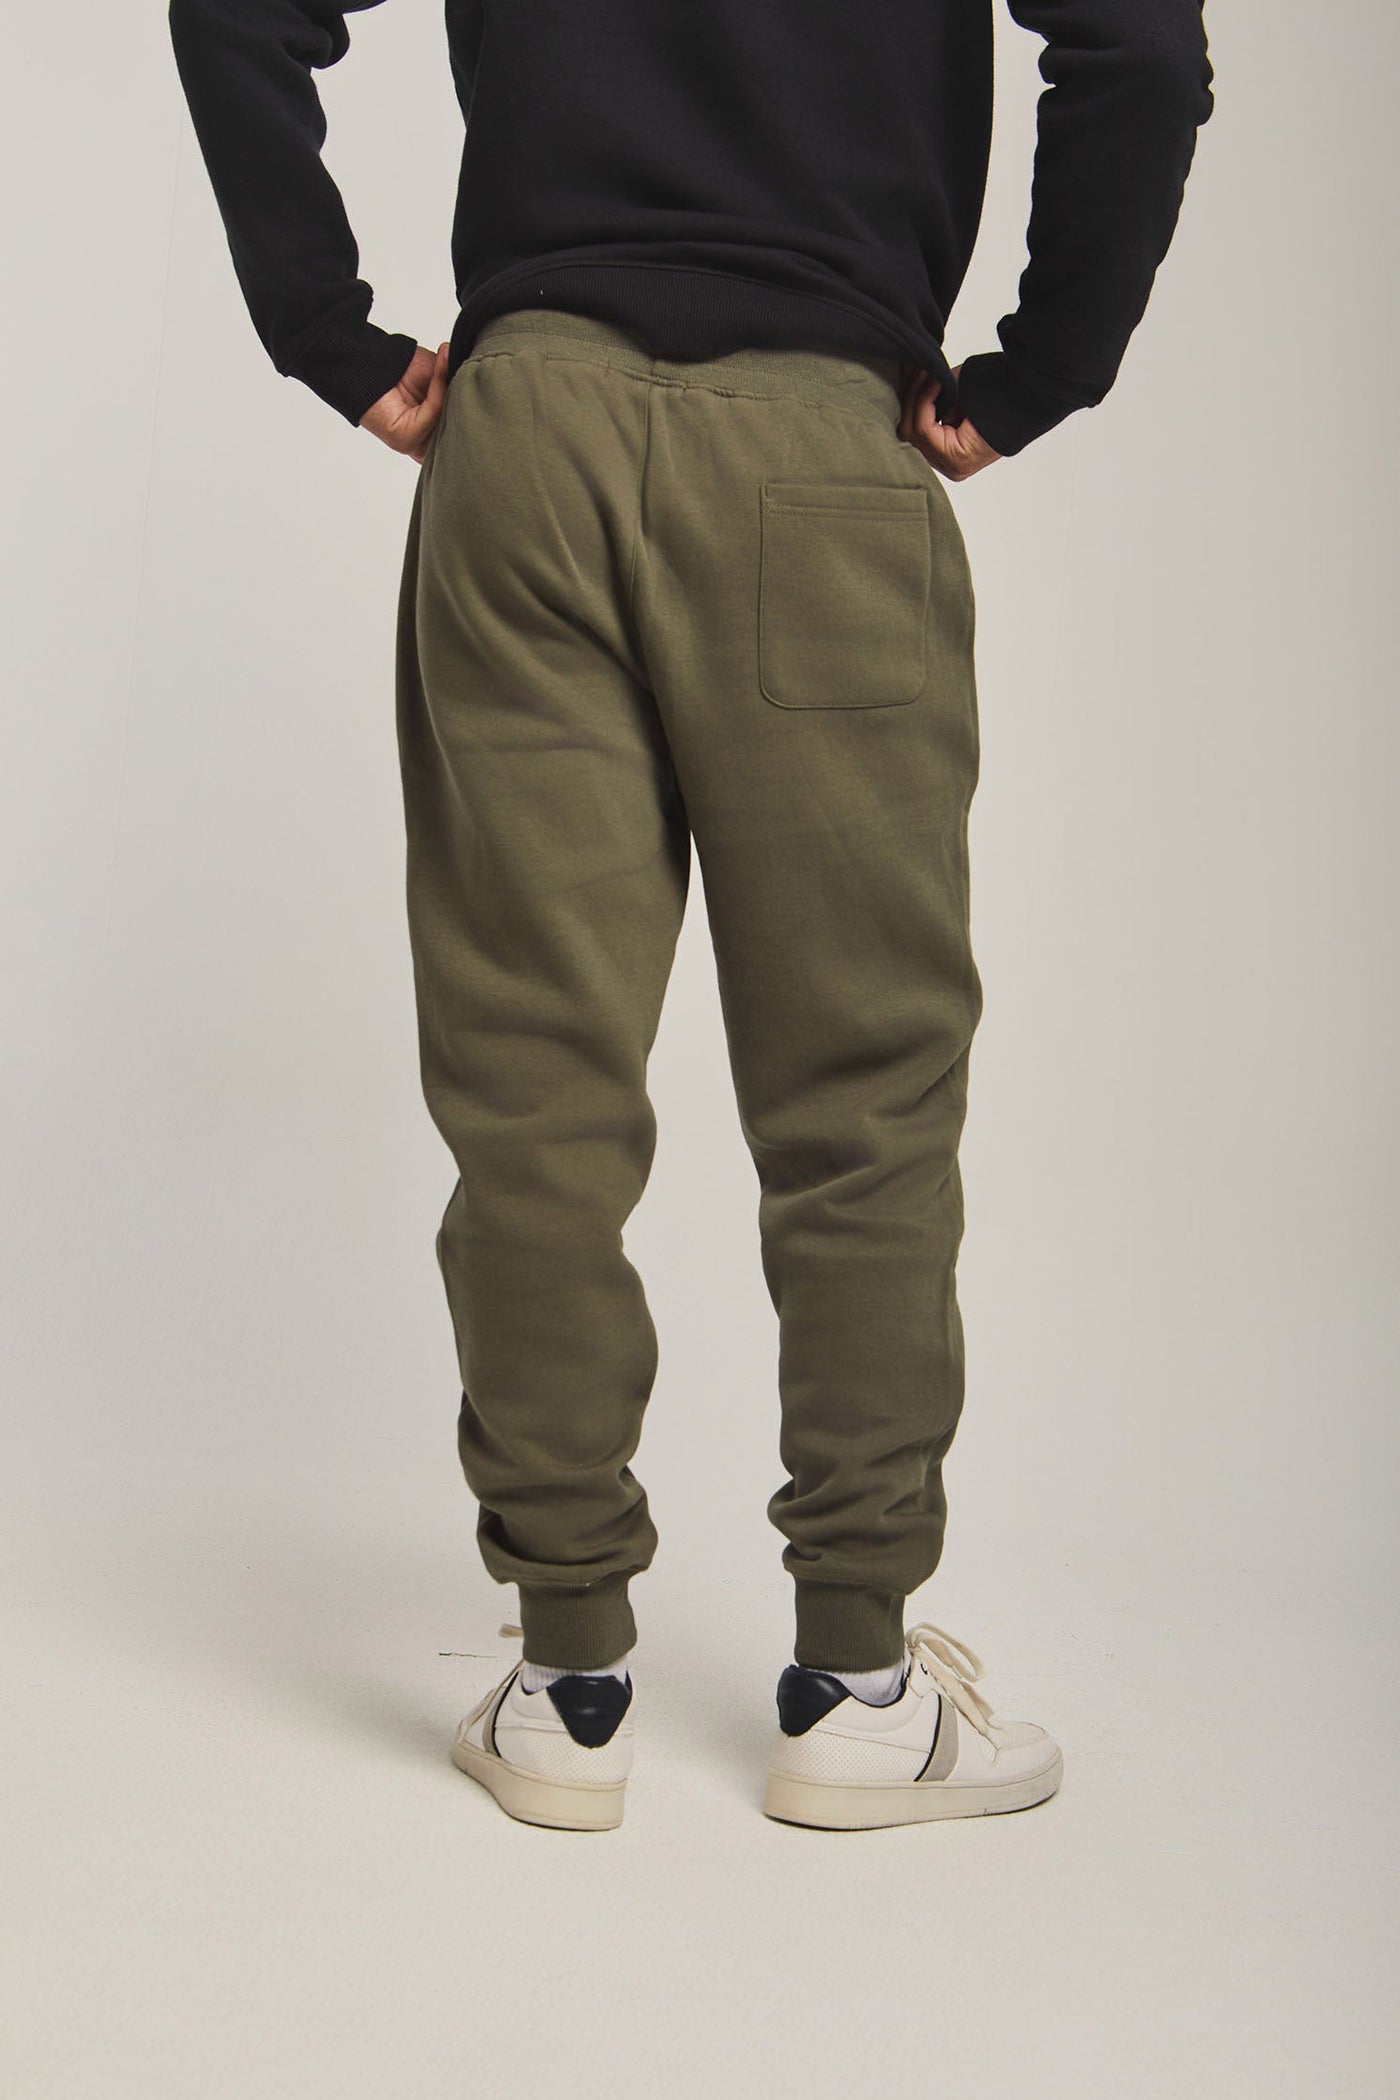 Sweatpants - Plain - With Pockets